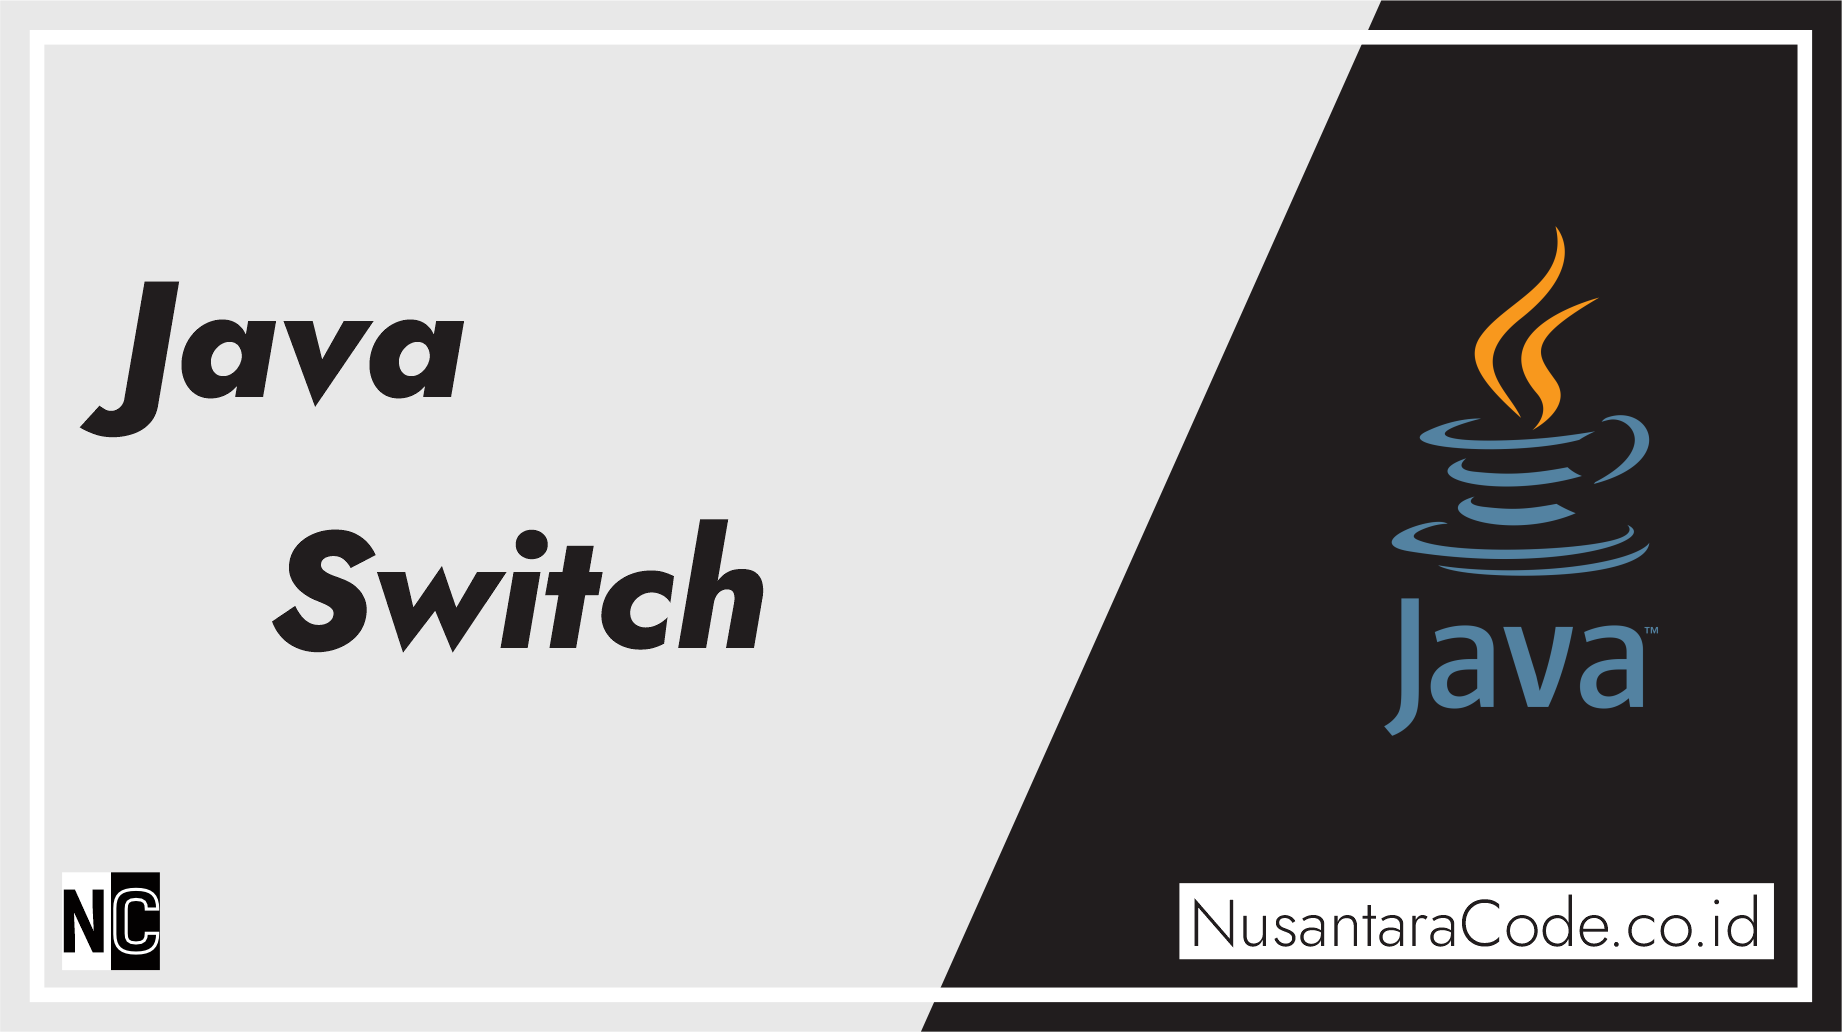 Java Switch